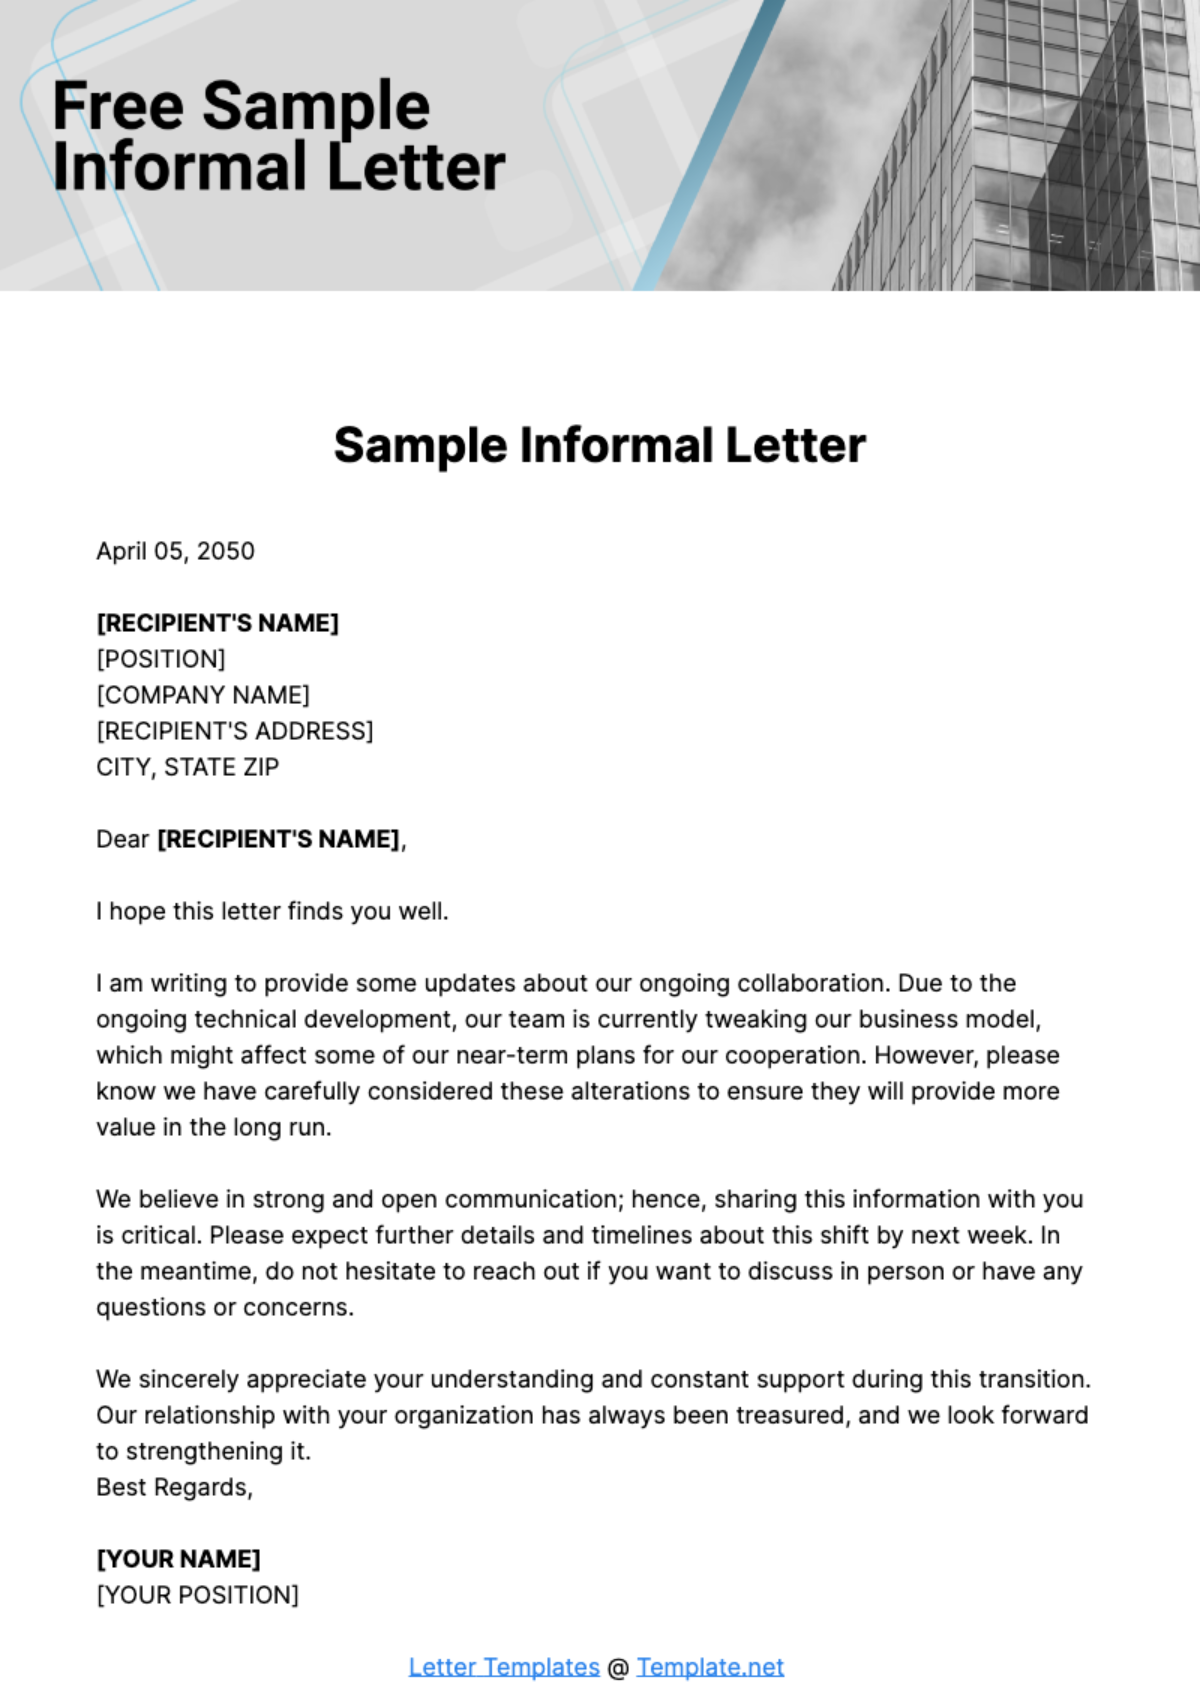 Free Sample Informal Letter Template